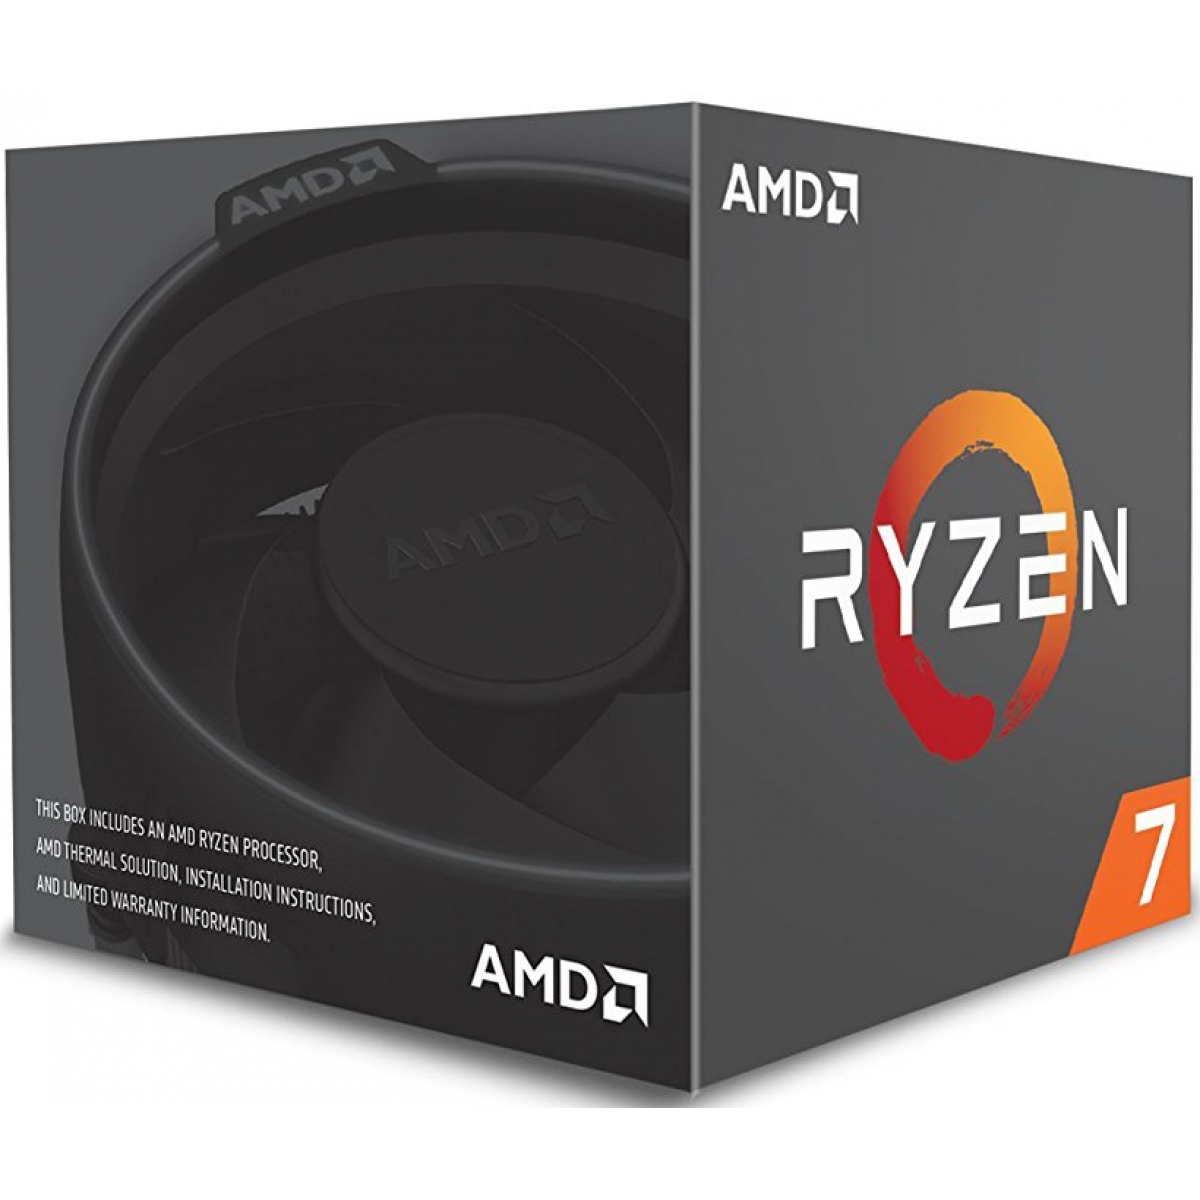 Processador AMD Ryzen 7 1700 3.0GHz (3.7GHz Turbo), 8-Cores 16-Threads, Cooler Wraith Spire com Led, AM4 YD1700BBAEBOX, S/ Video